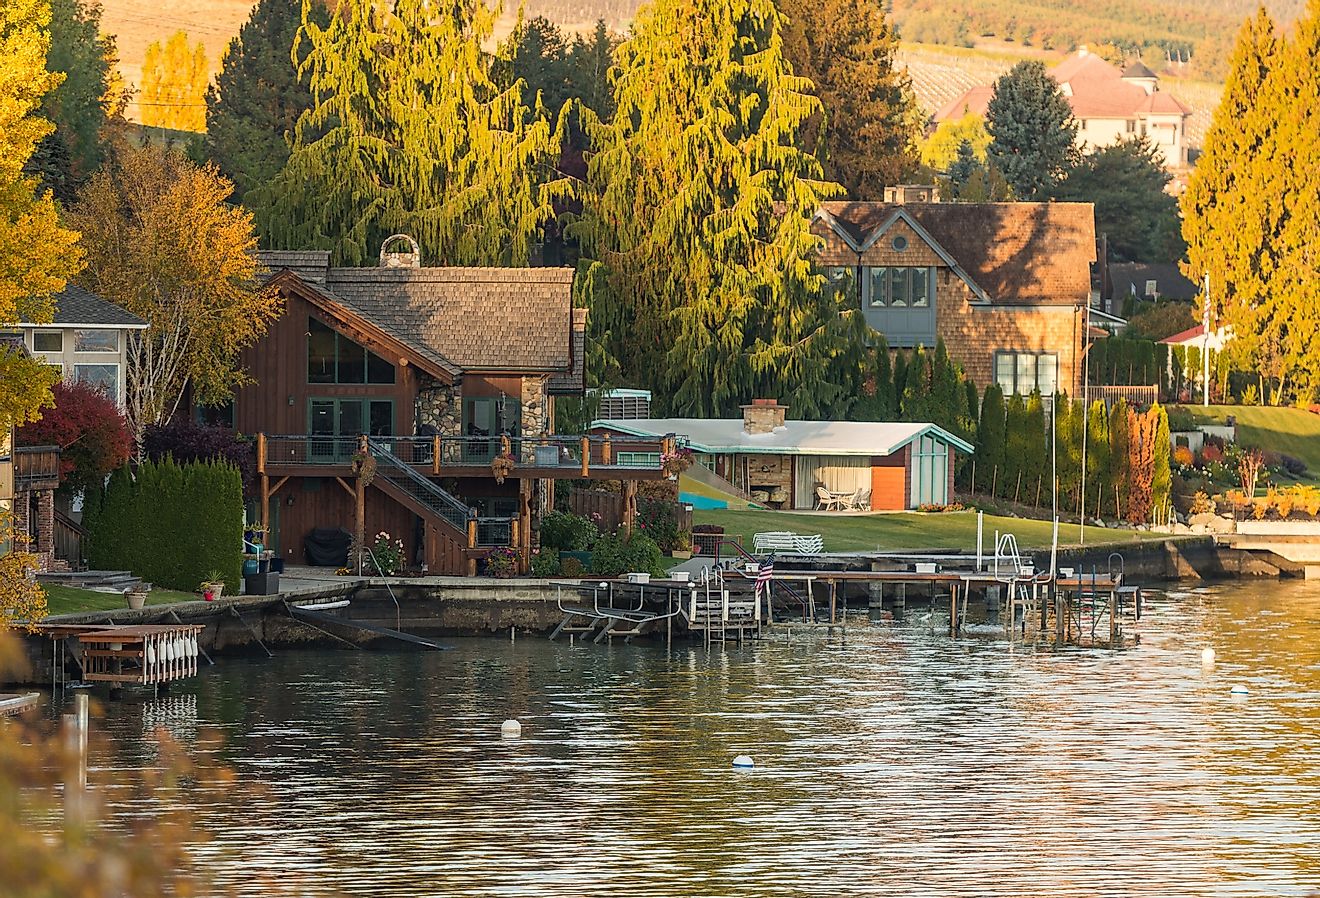 Houses and jetties on the shores of Chelan Lake, Washington. Image credit Esteban Martinena Guerrer via Shutterstock